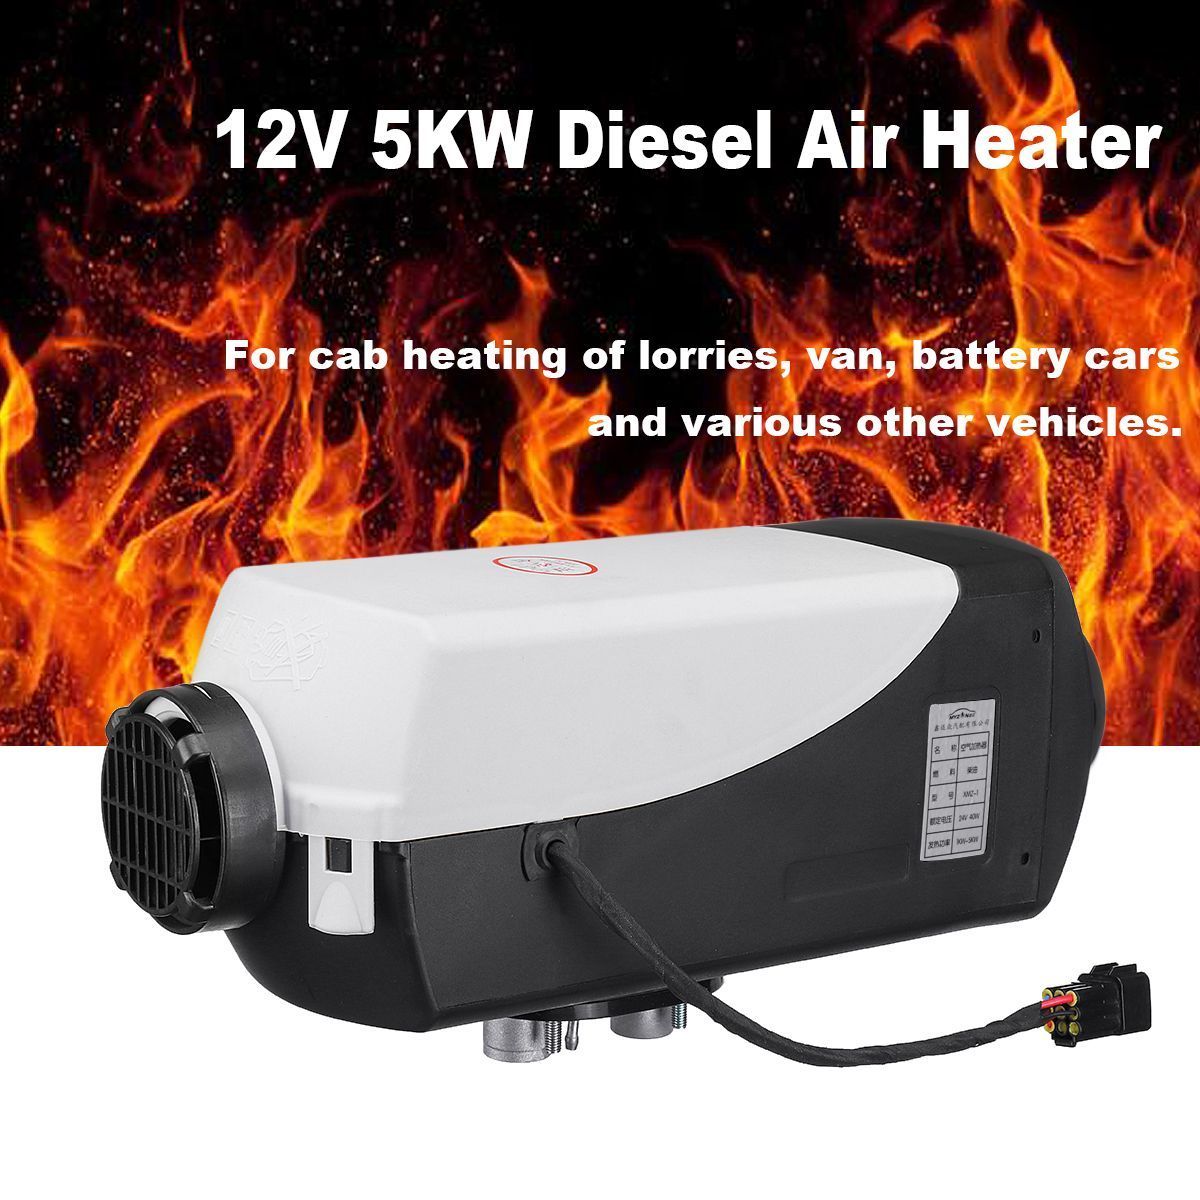 5KW-12V-Diesel-Air-Car-Heater-Digital-Thermostat-LCD-Switch-Remote-Control-Trucks-Boat-Car-1348392